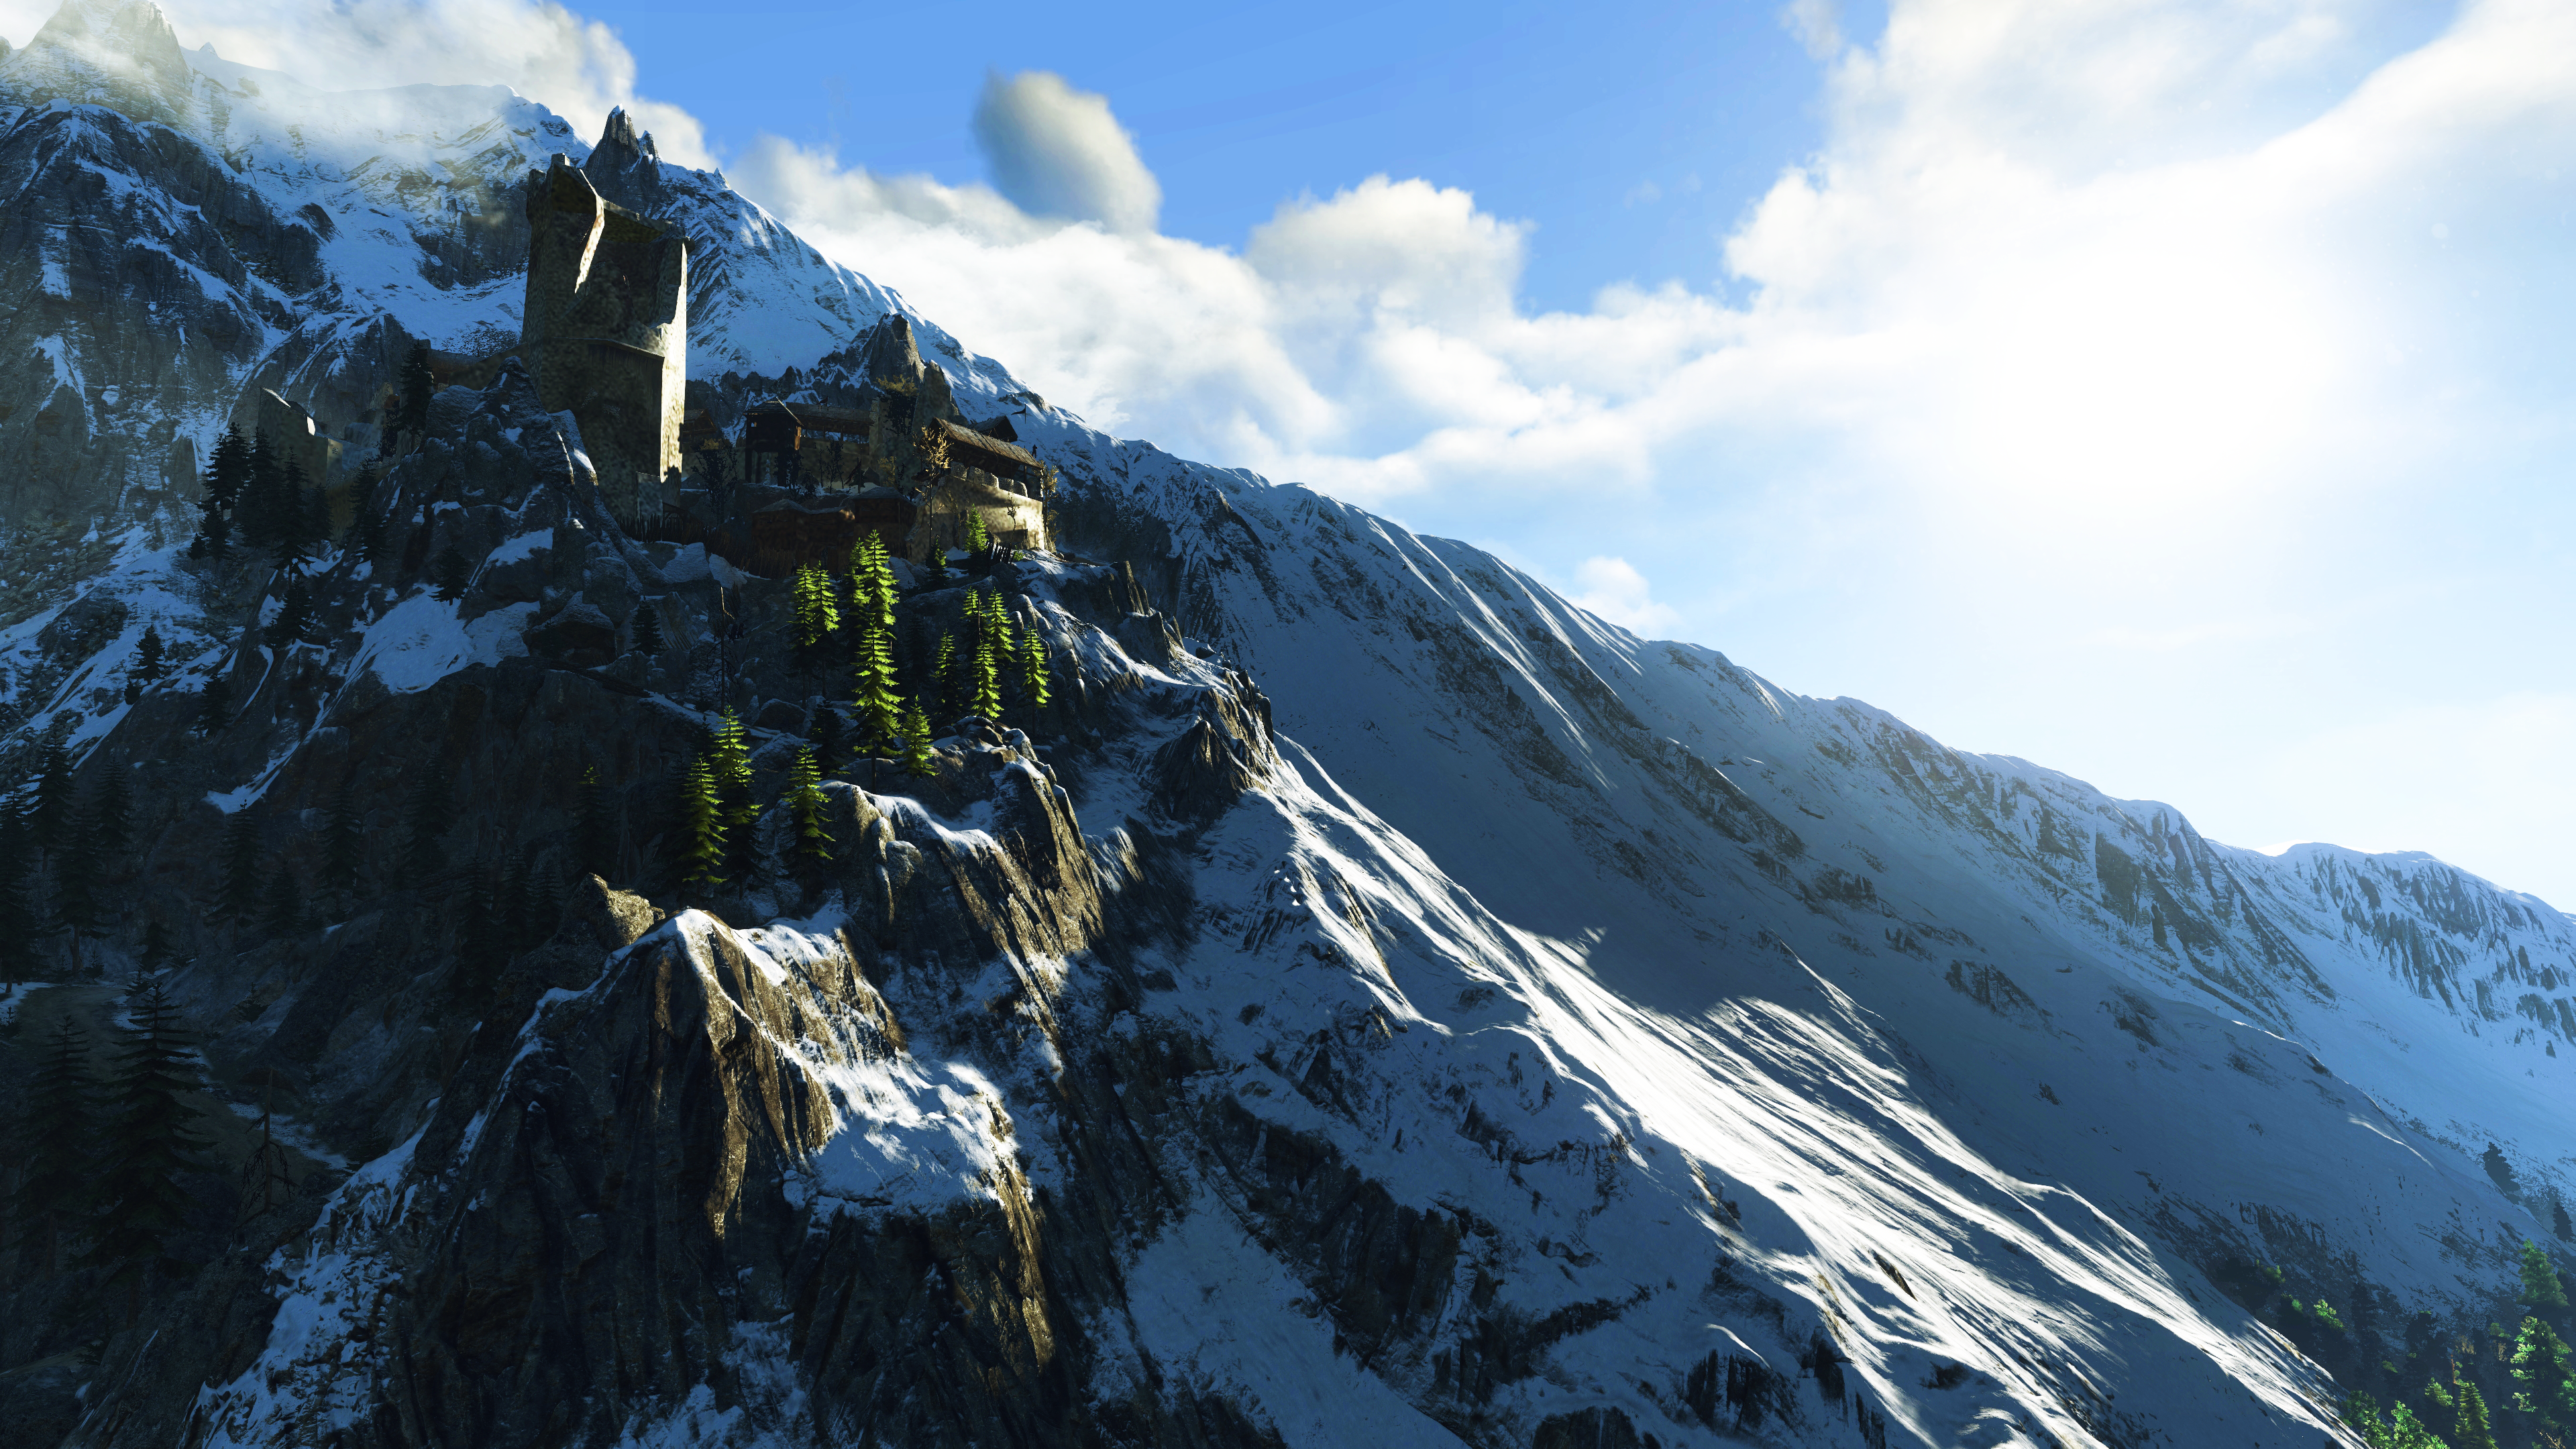 General 3840x2160 The Witcher 3: Wild Hunt video games Skellige screen shot video game landscape RPG PC gaming castle snowy peak CD Projekt RED